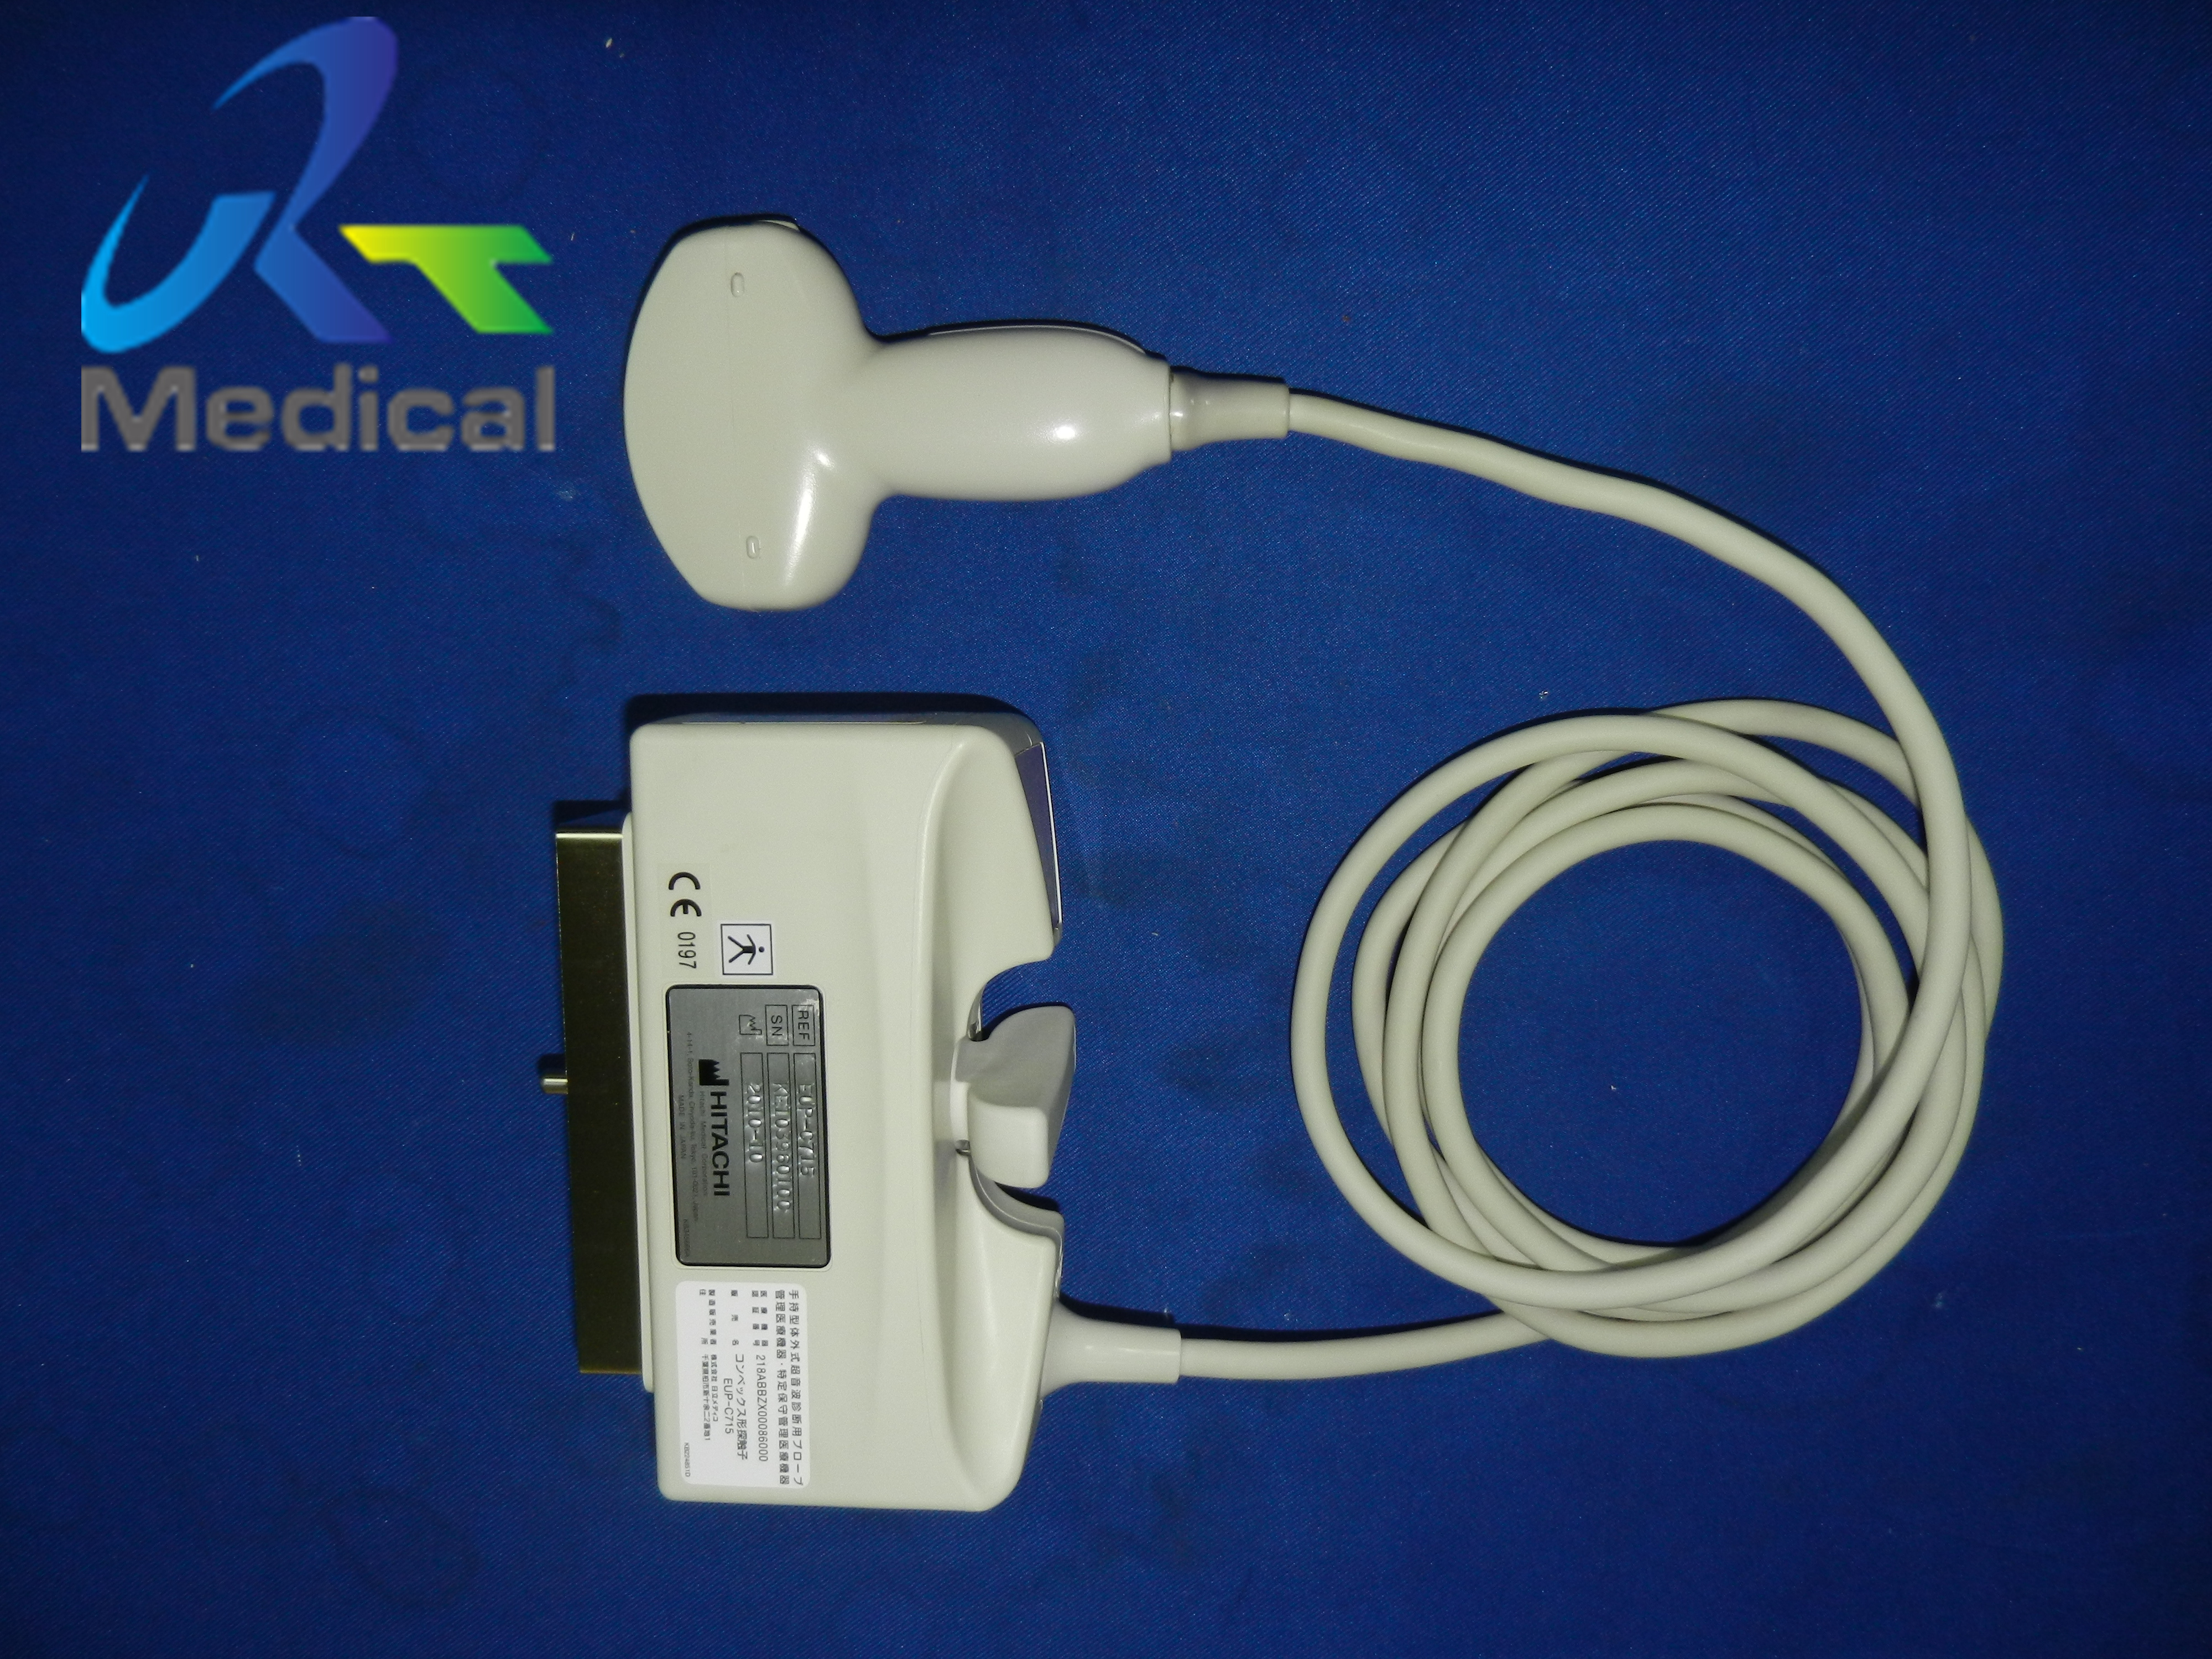 Hitachi EUP-C715 Abdominal Ultrasound Probe Imaging Diagnosis Equipment Care Supplies